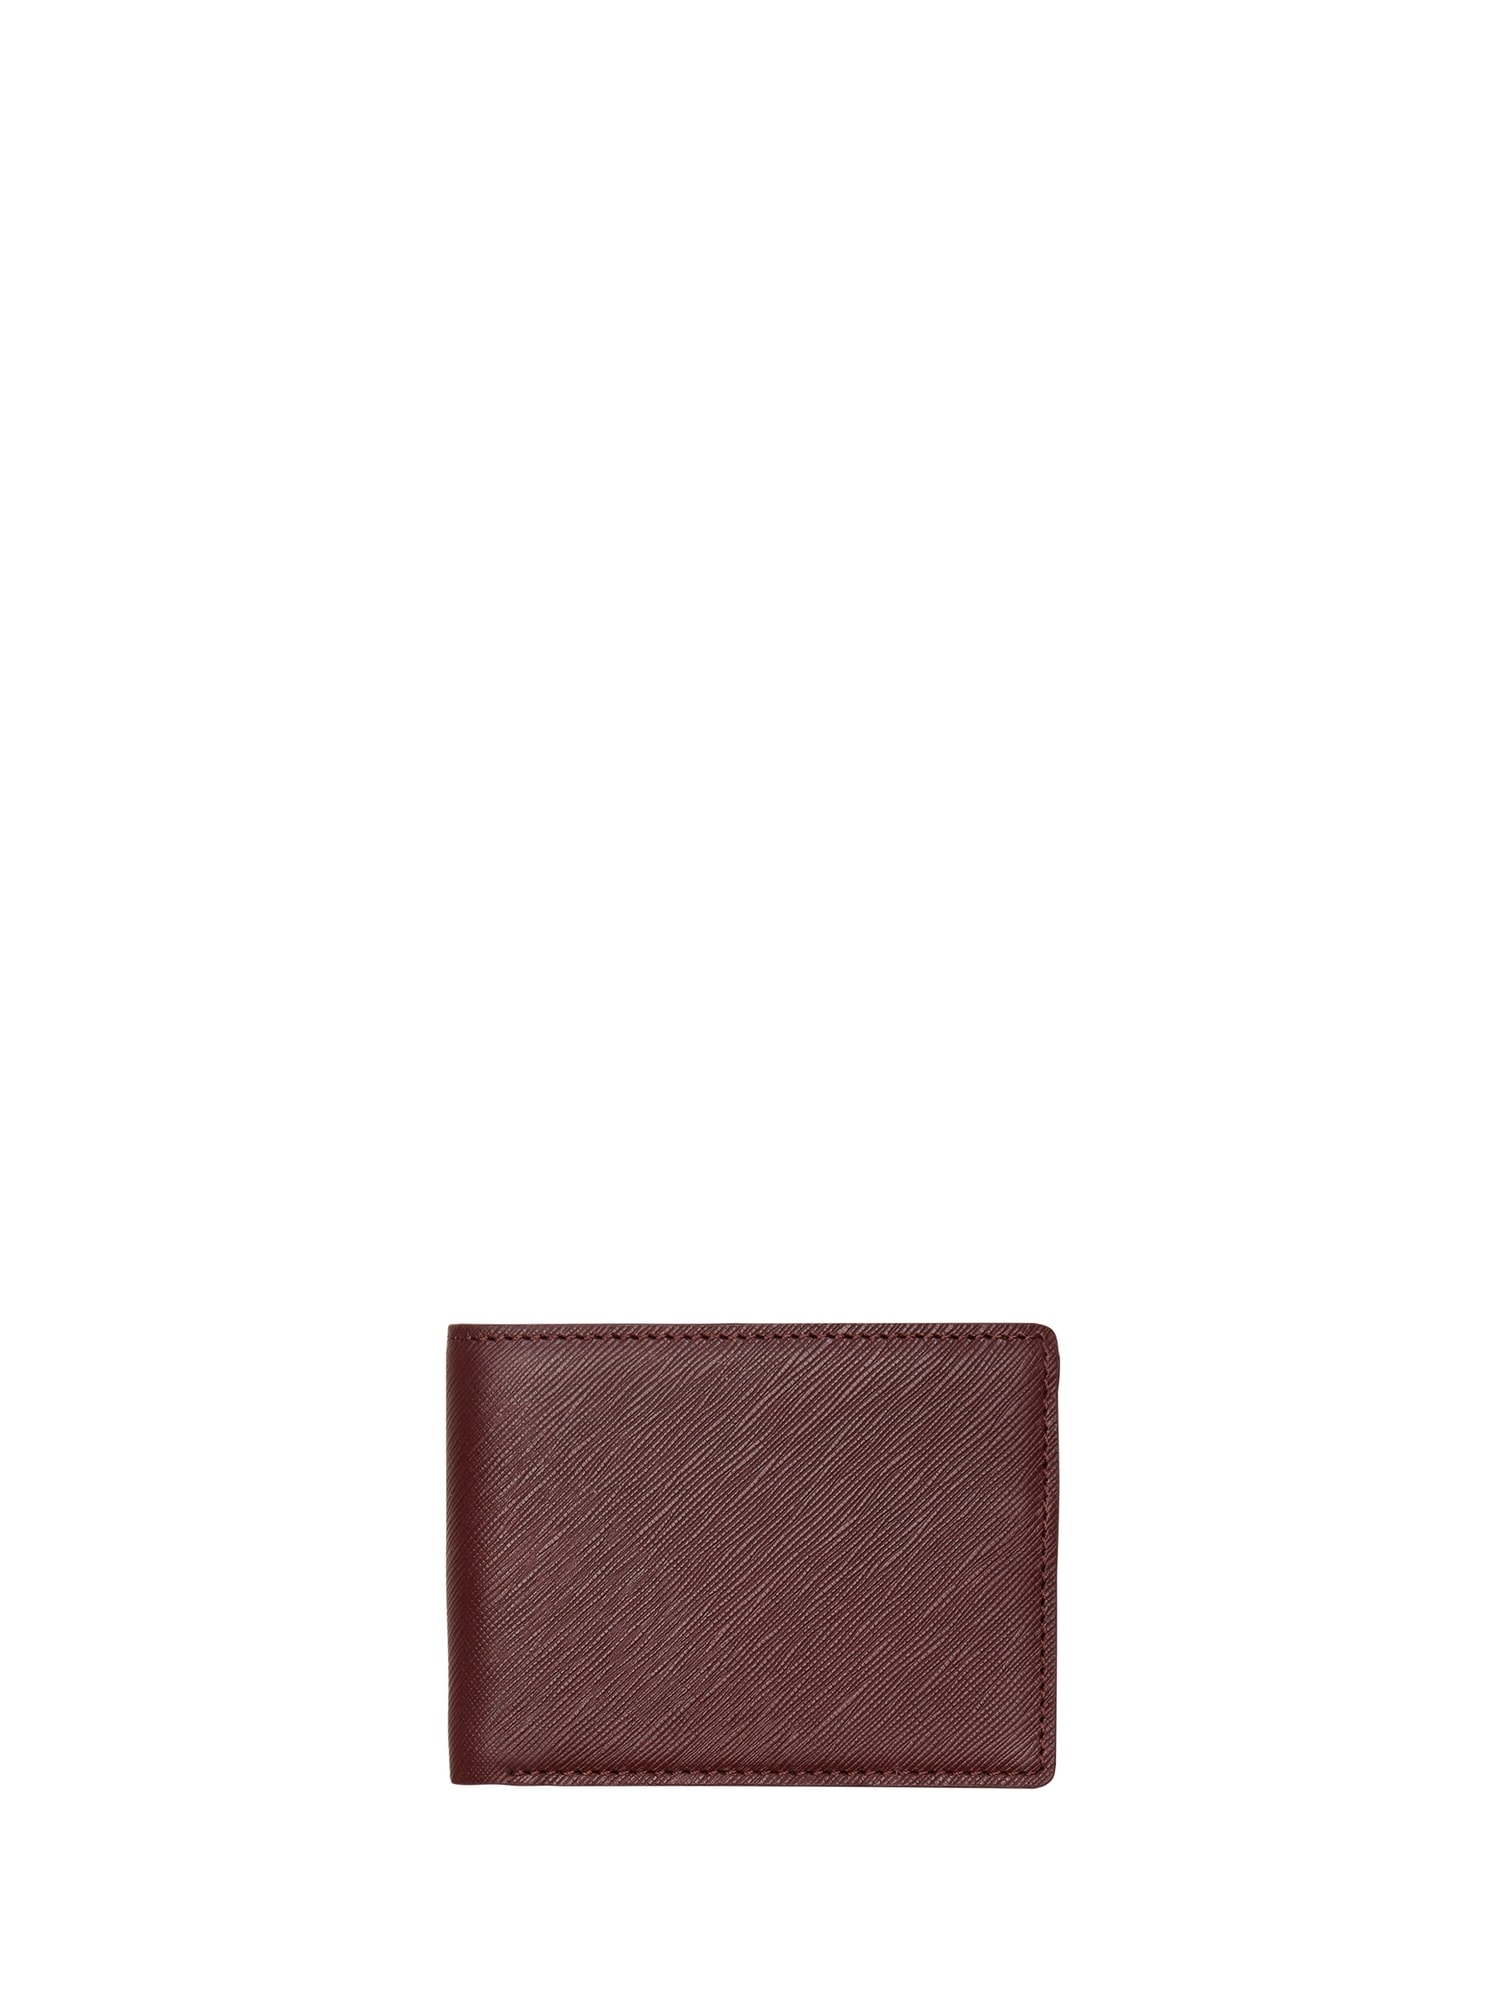 Saffiano Leather Billfold Wallet